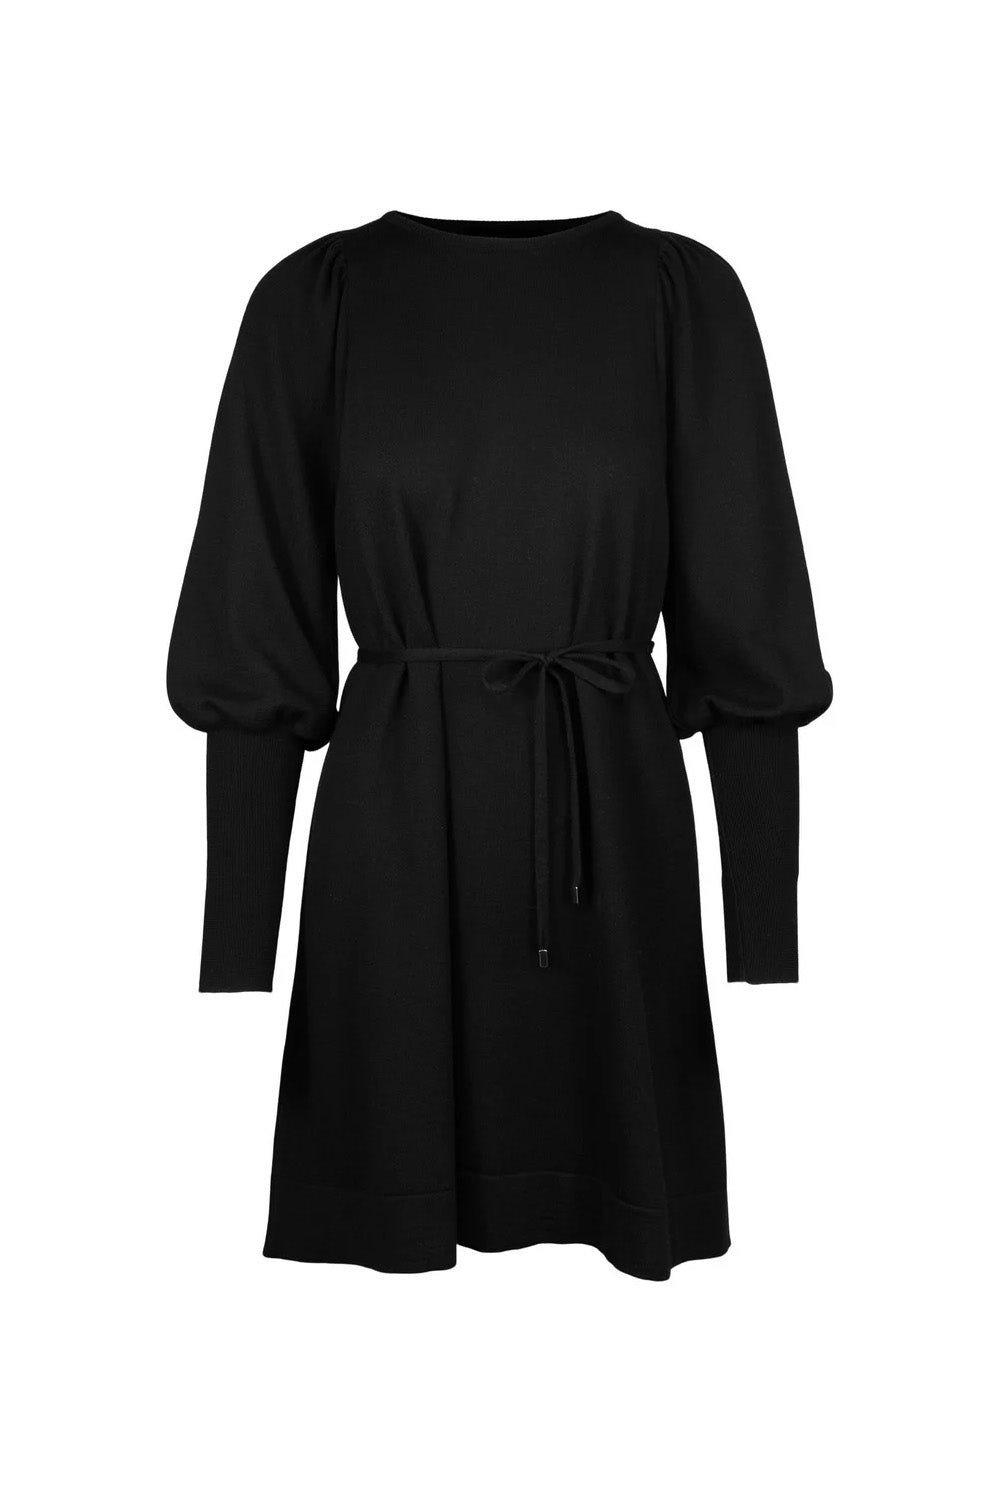 Milly-Merino-Dress-Black